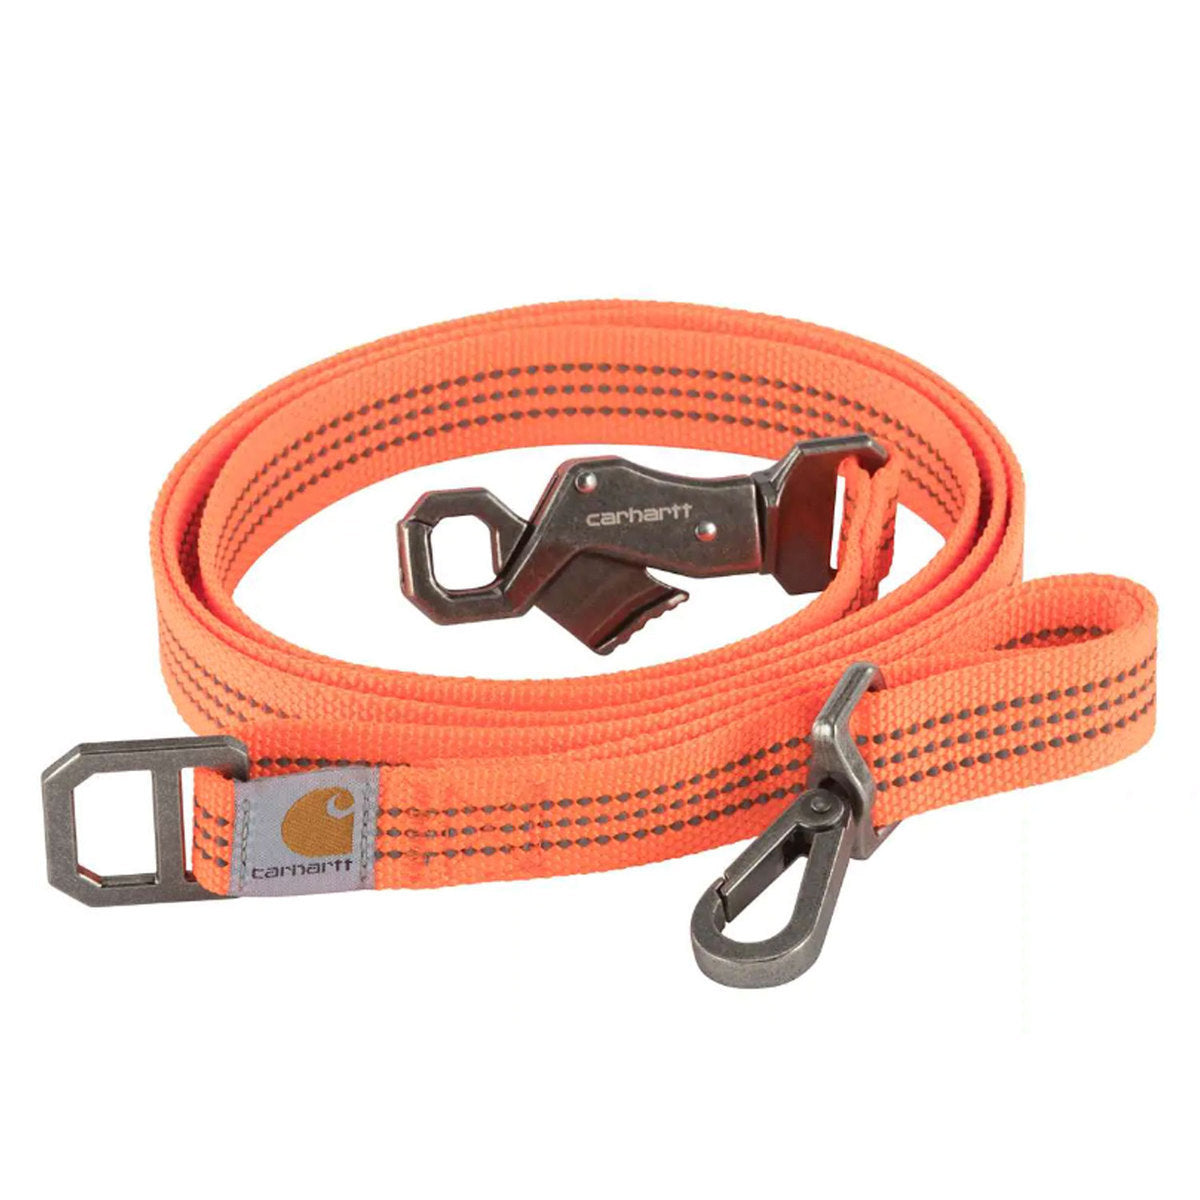 Carhartt Dog Tradesman Leash #P00003460